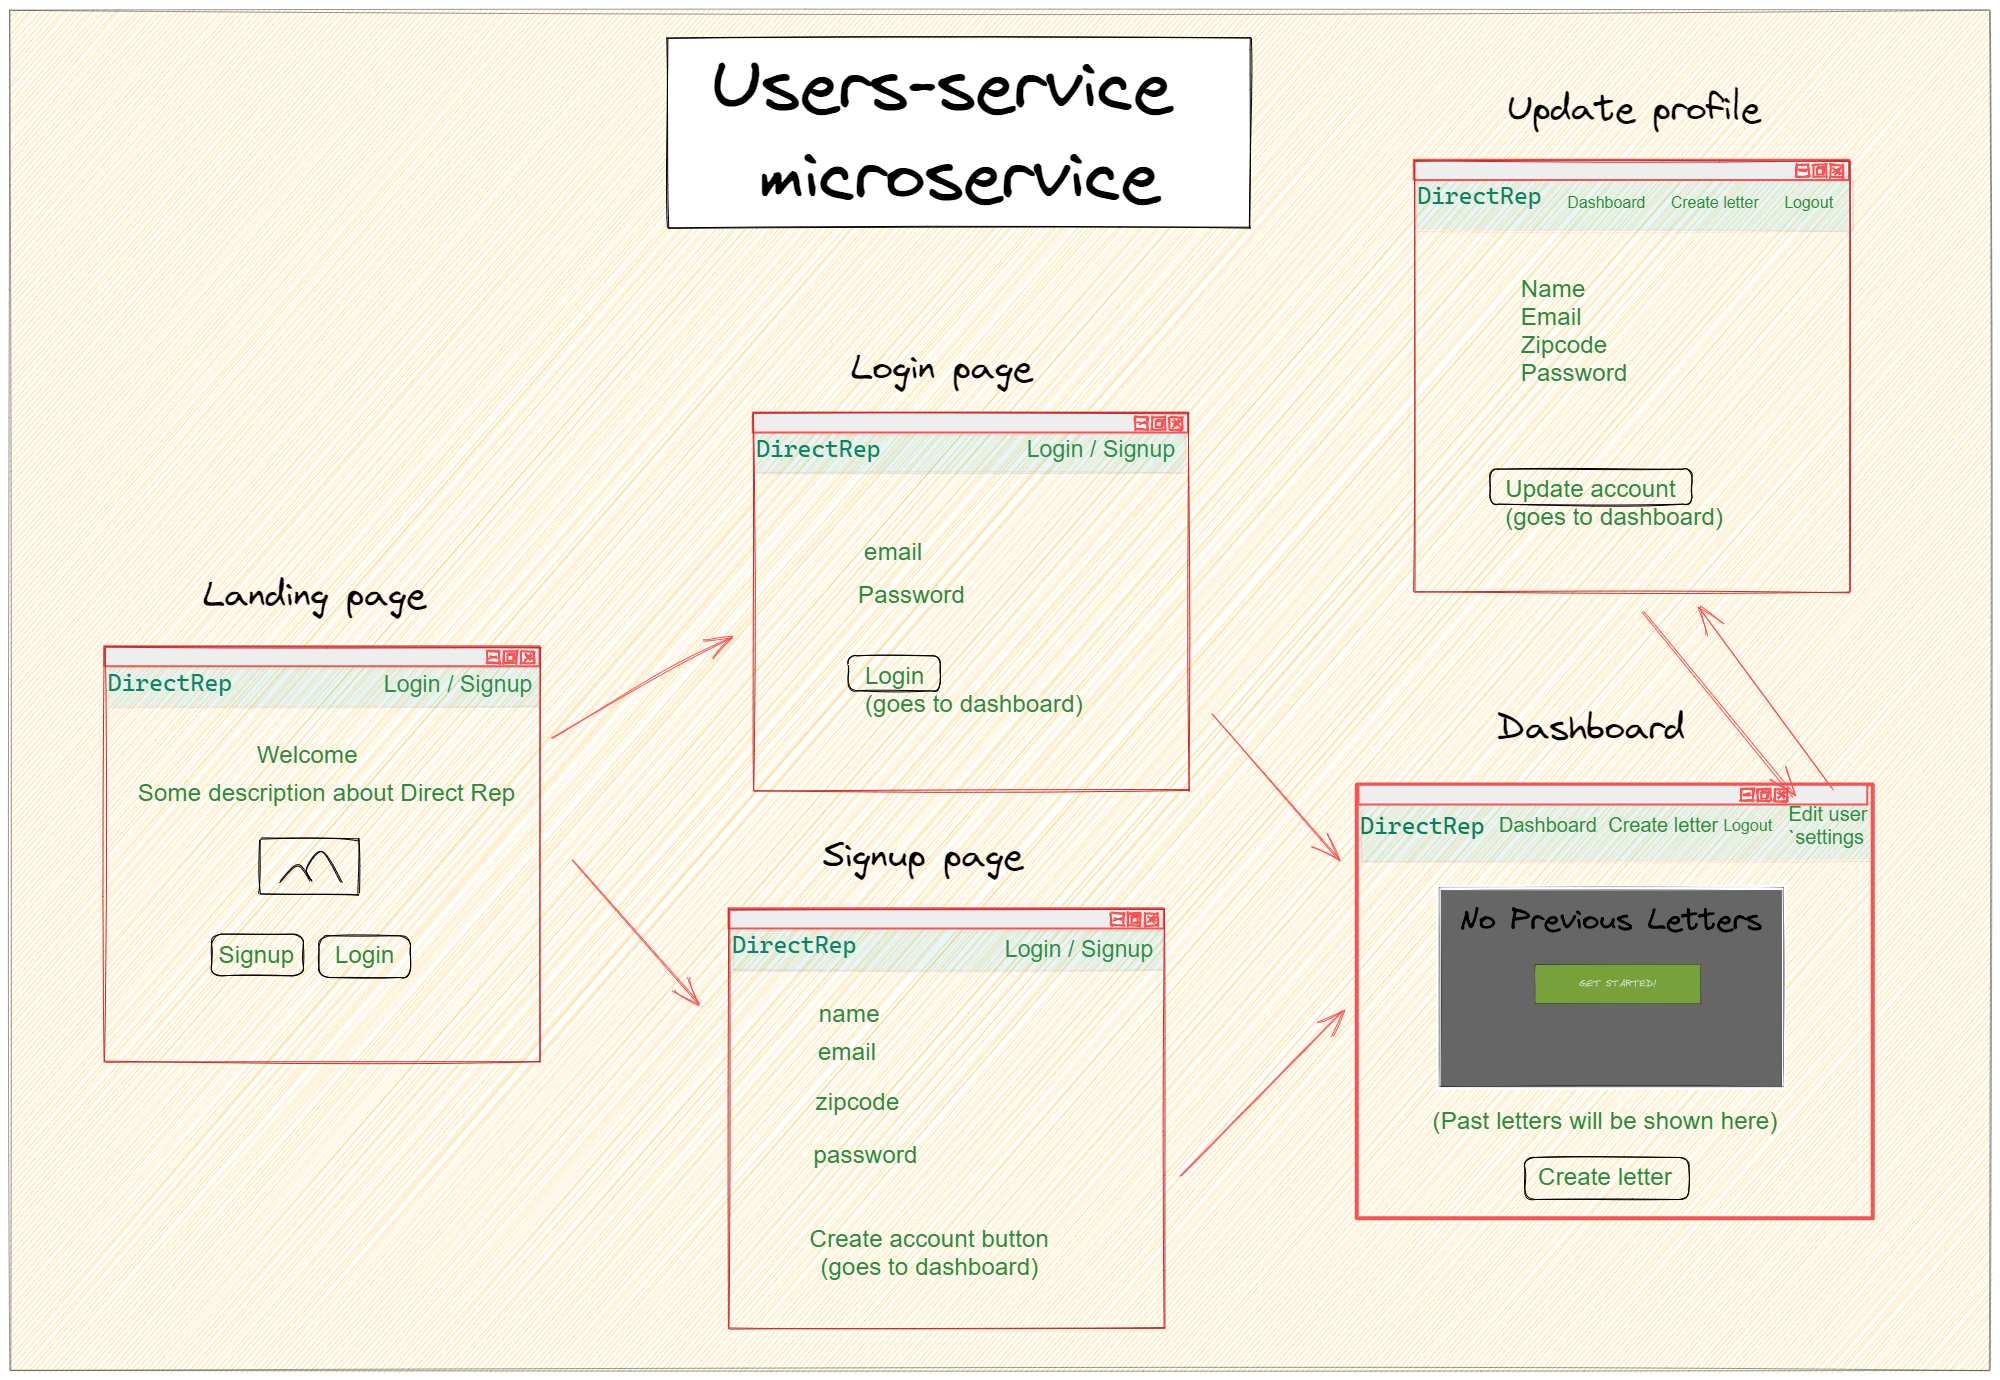 users-service microservice architecture diagram